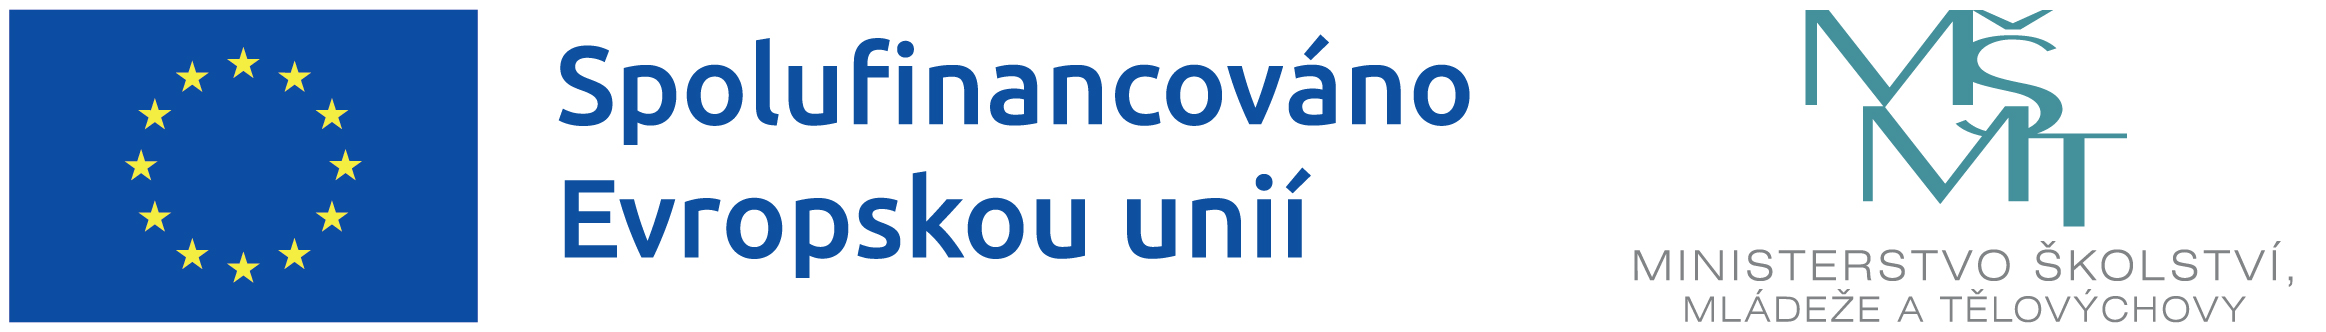 Logolink OP VVV hor cb cz